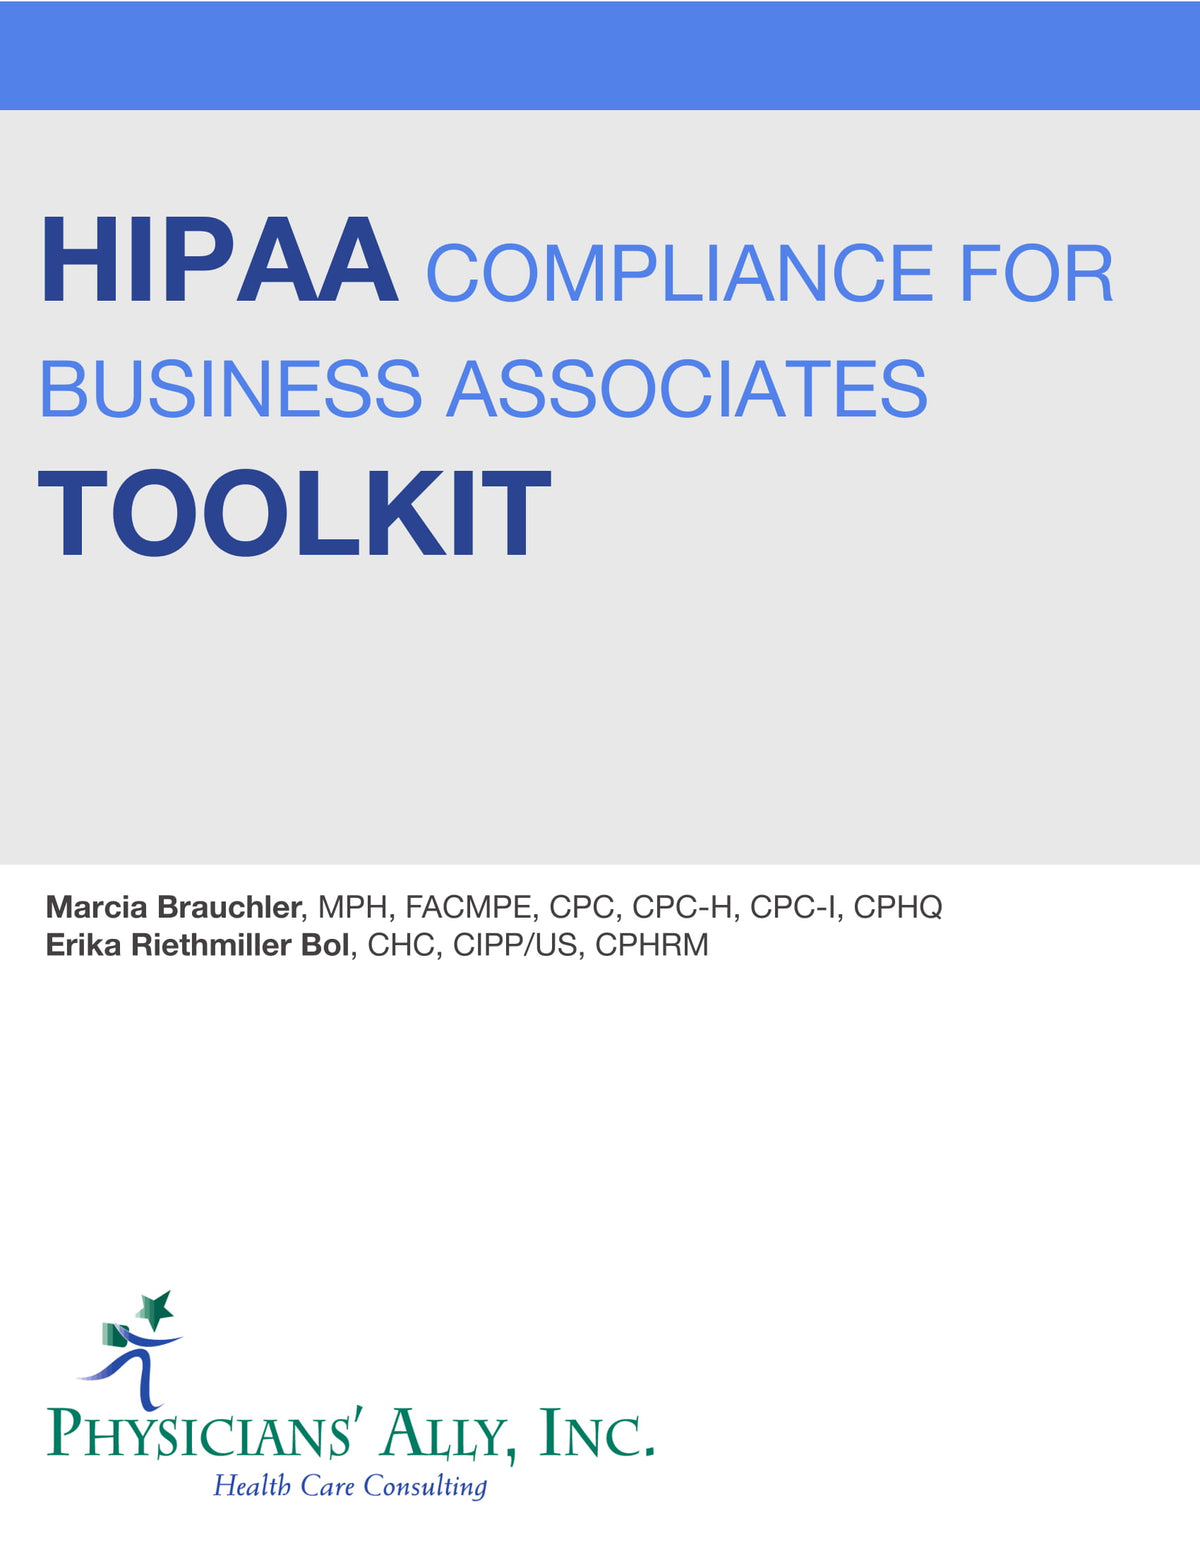 Business Associates HIPAA Compliance Toolkit